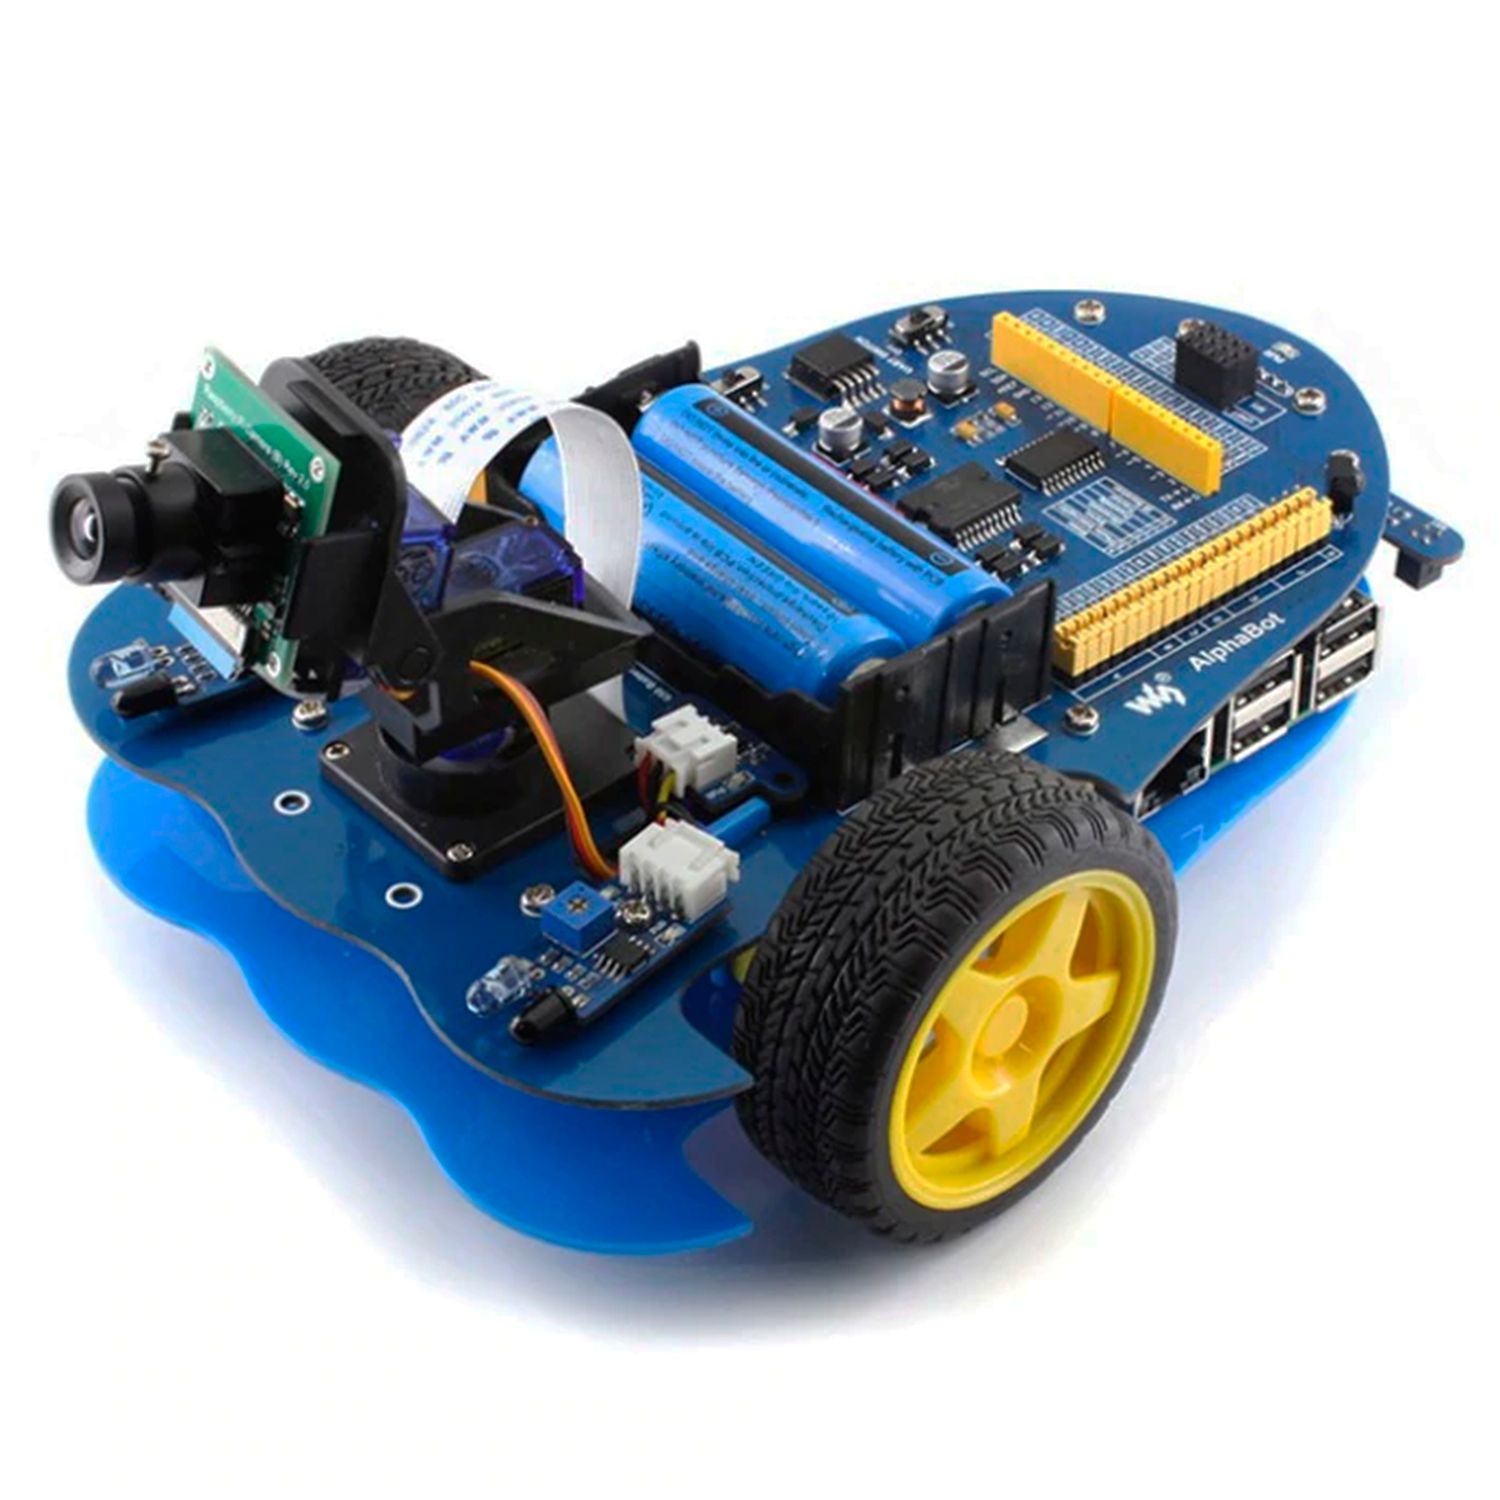 Набор для сборки робота - автомобиля AlphaBot на Raspberry Pi